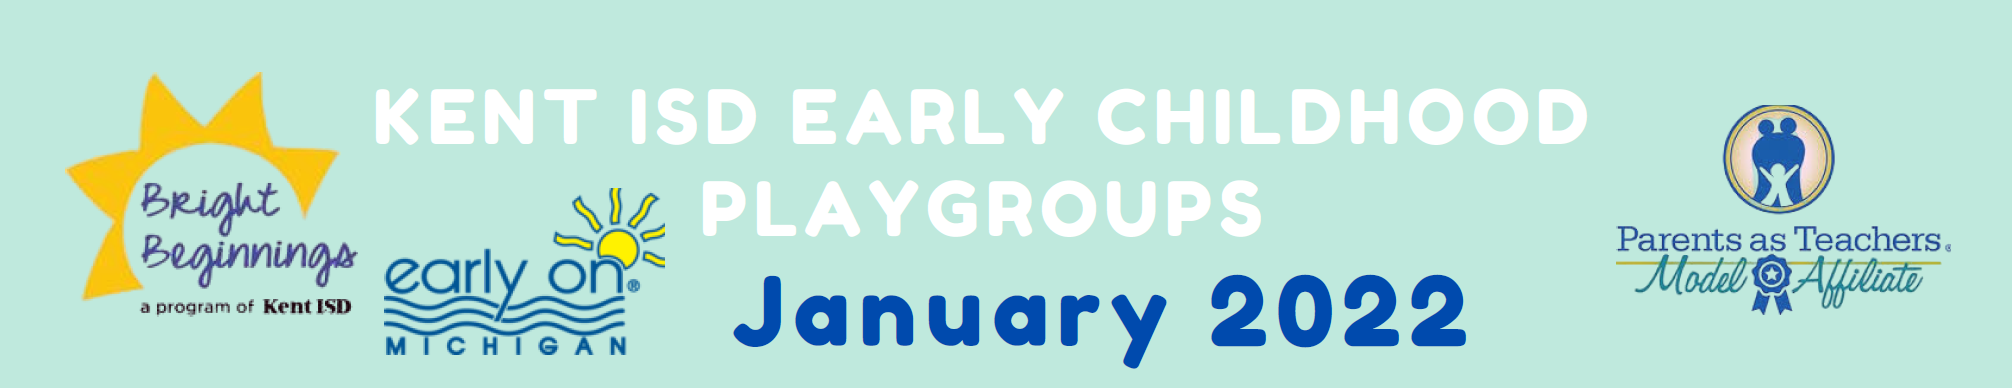 Kent ISD Early Childhood Playgroups January 2022